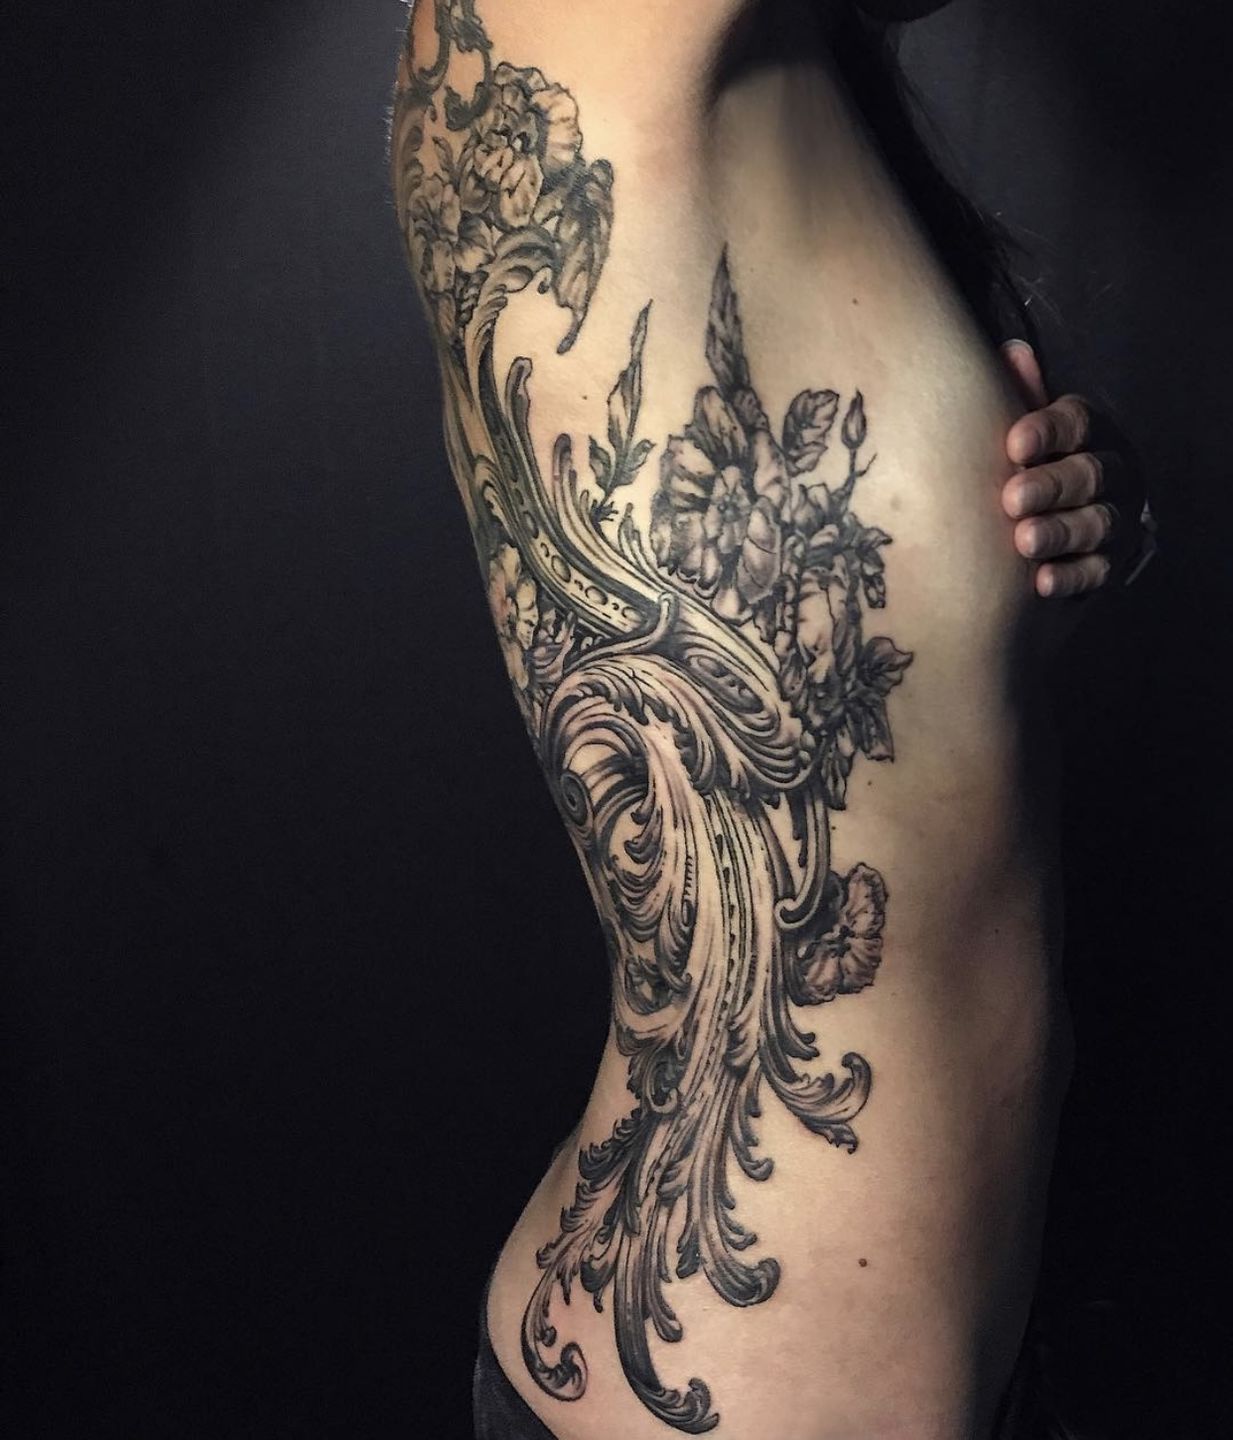 A few side tattoos , rib... - Tattoo Studio 81 - Manchester | Facebook